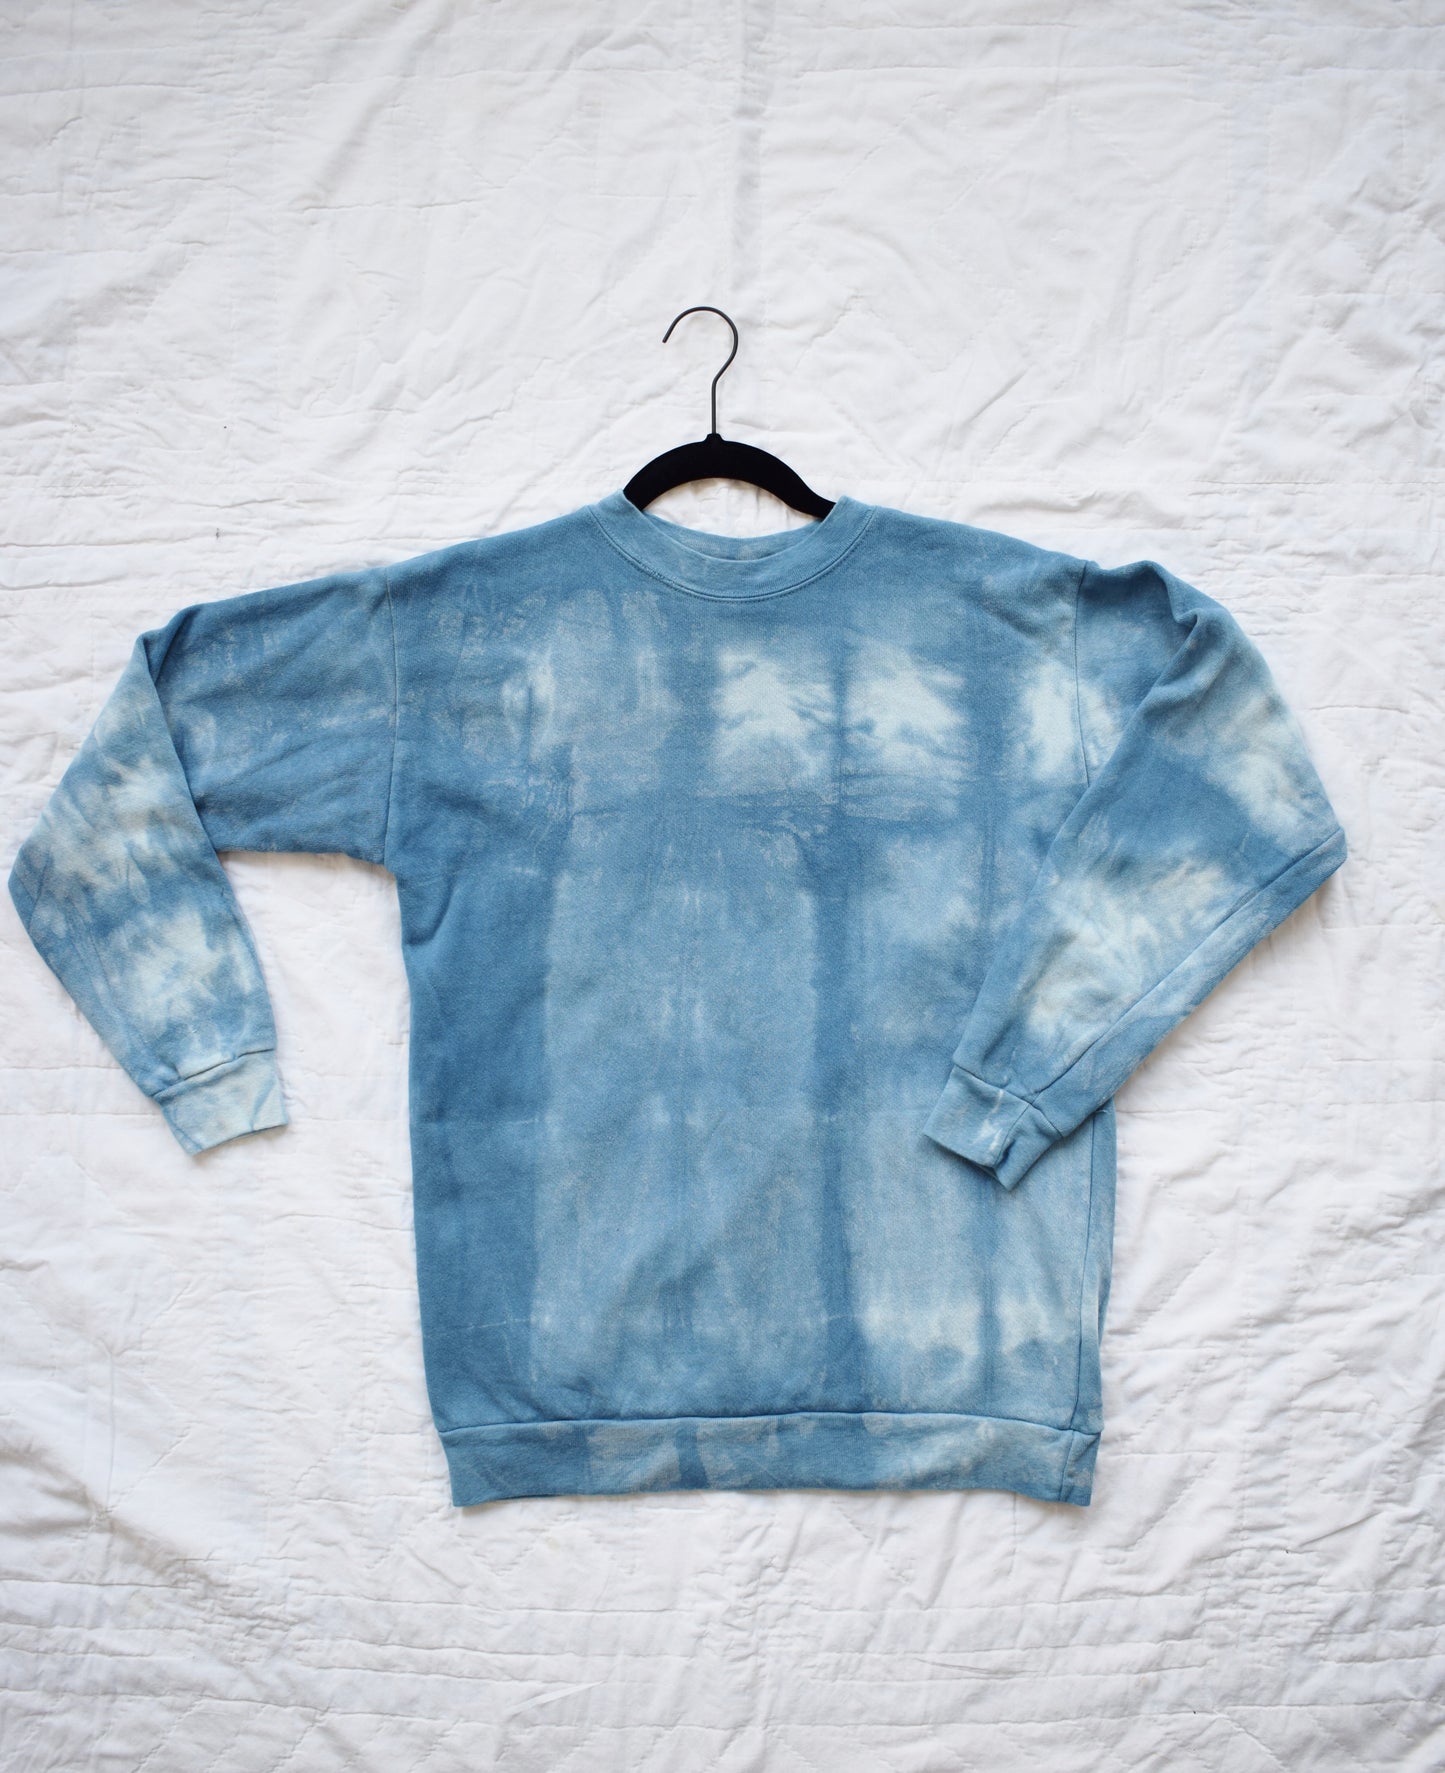 Indigo Dyed Sweatshirt, Window Pane Series 3